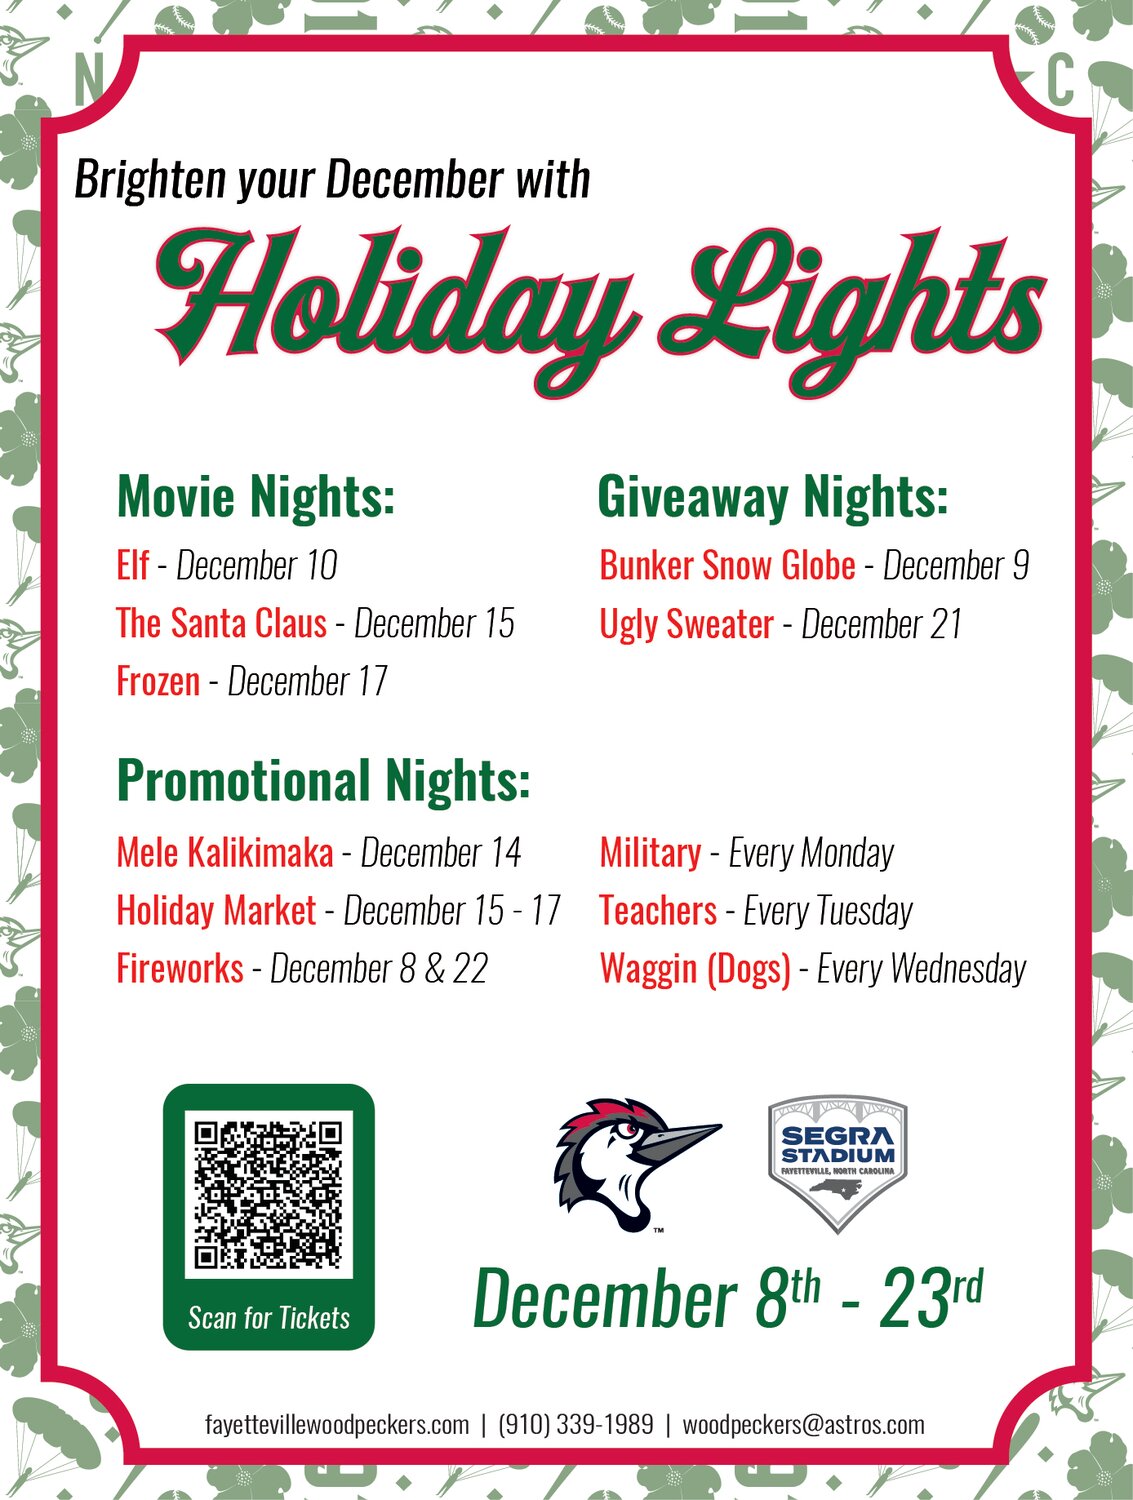 Fayetteville Woodpeckers' Segra Stadium’s Holiday Lights opening advertisement.